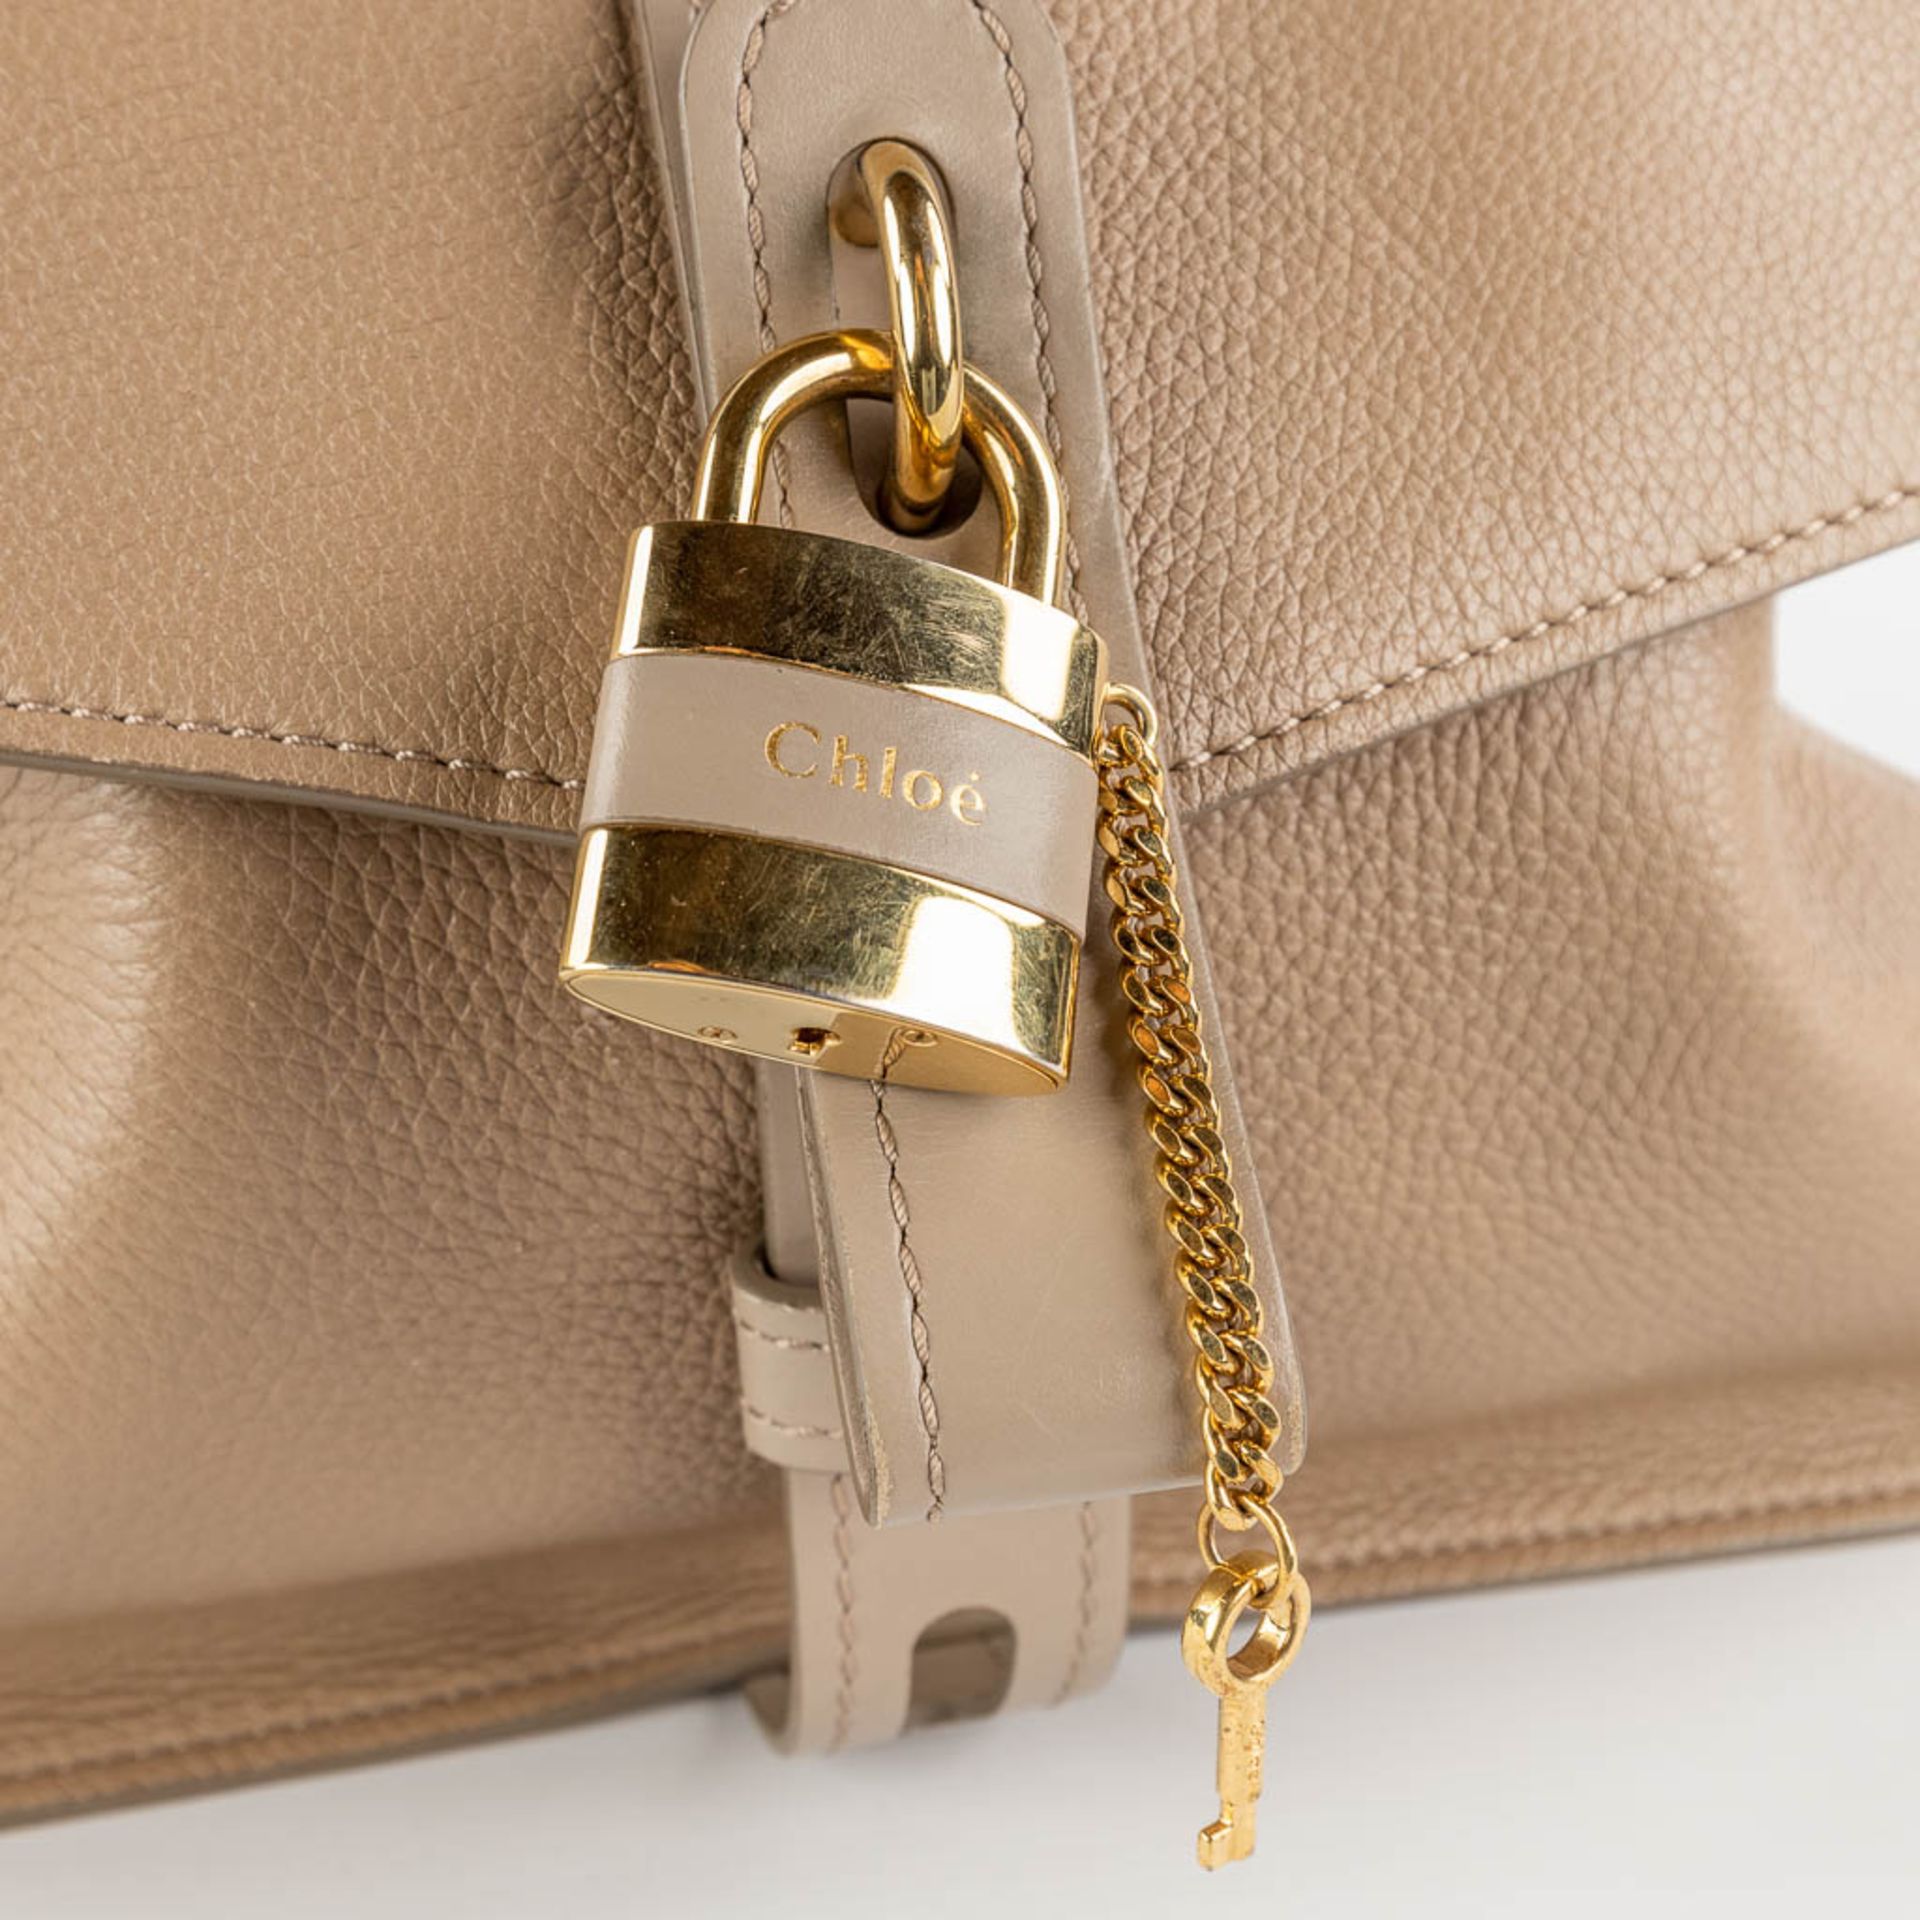 Chloé, a handbag made of brown leather. (W:38 x H:32 cm) - Image 9 of 19